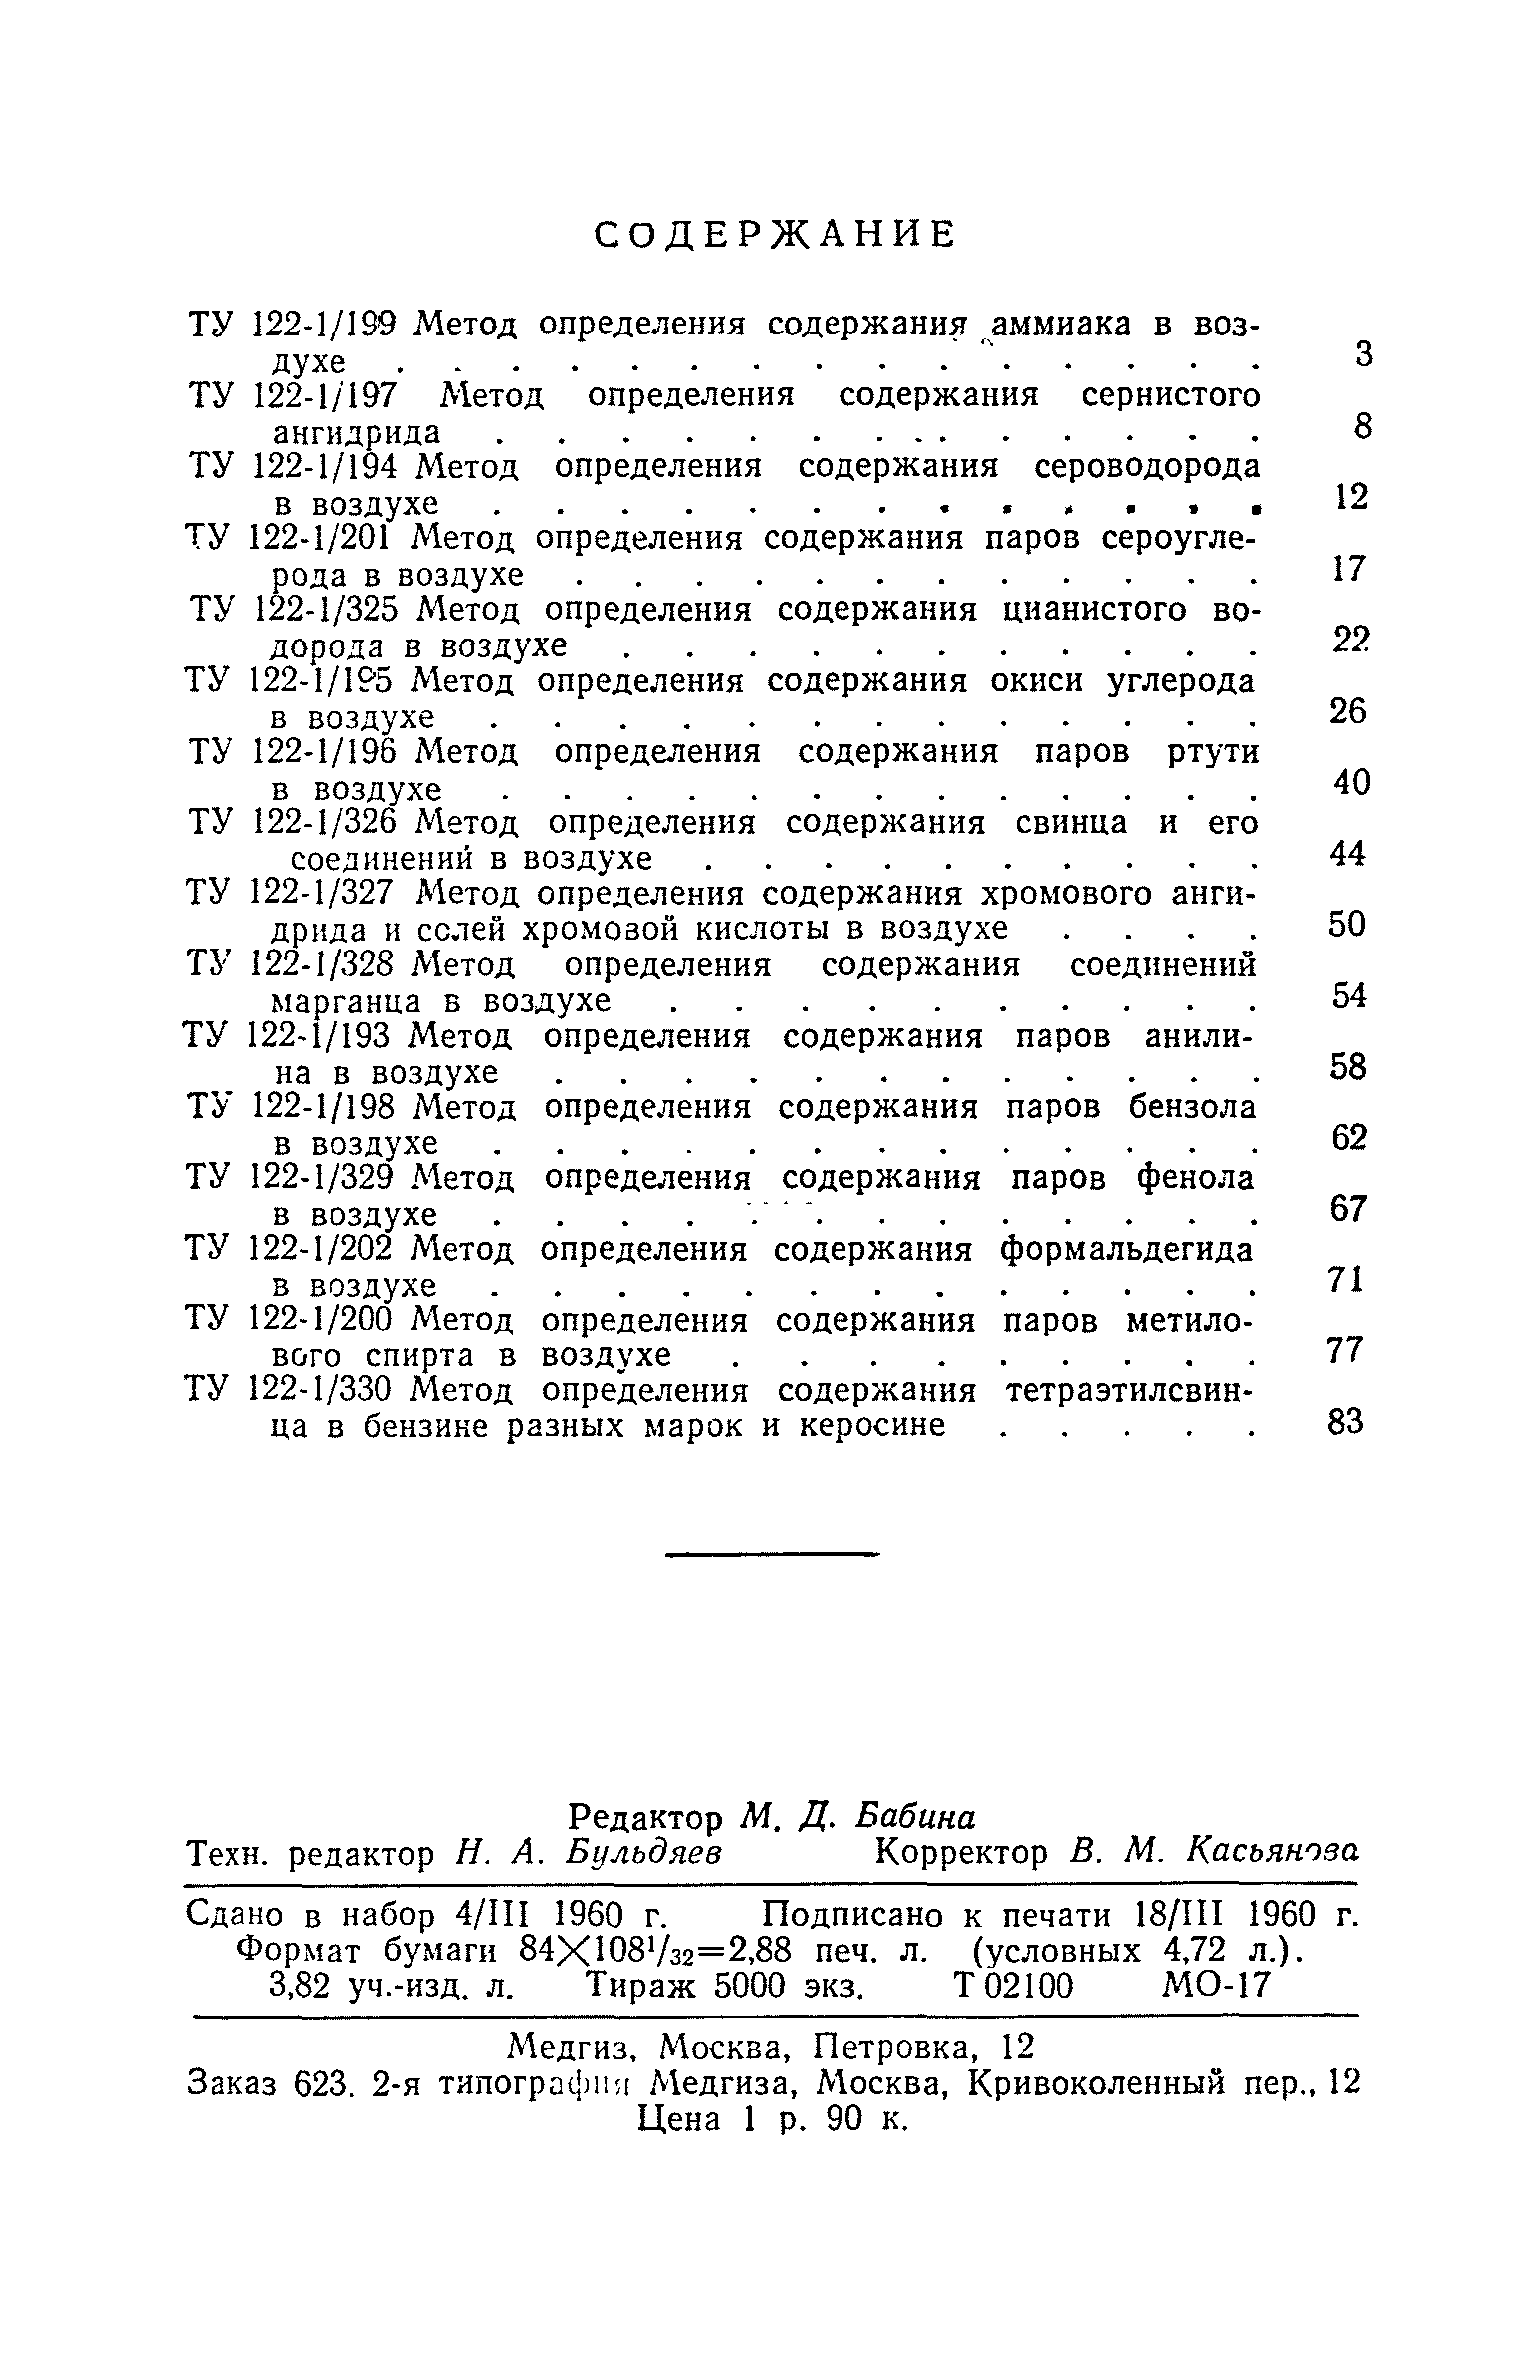 ТУ 122-1/194